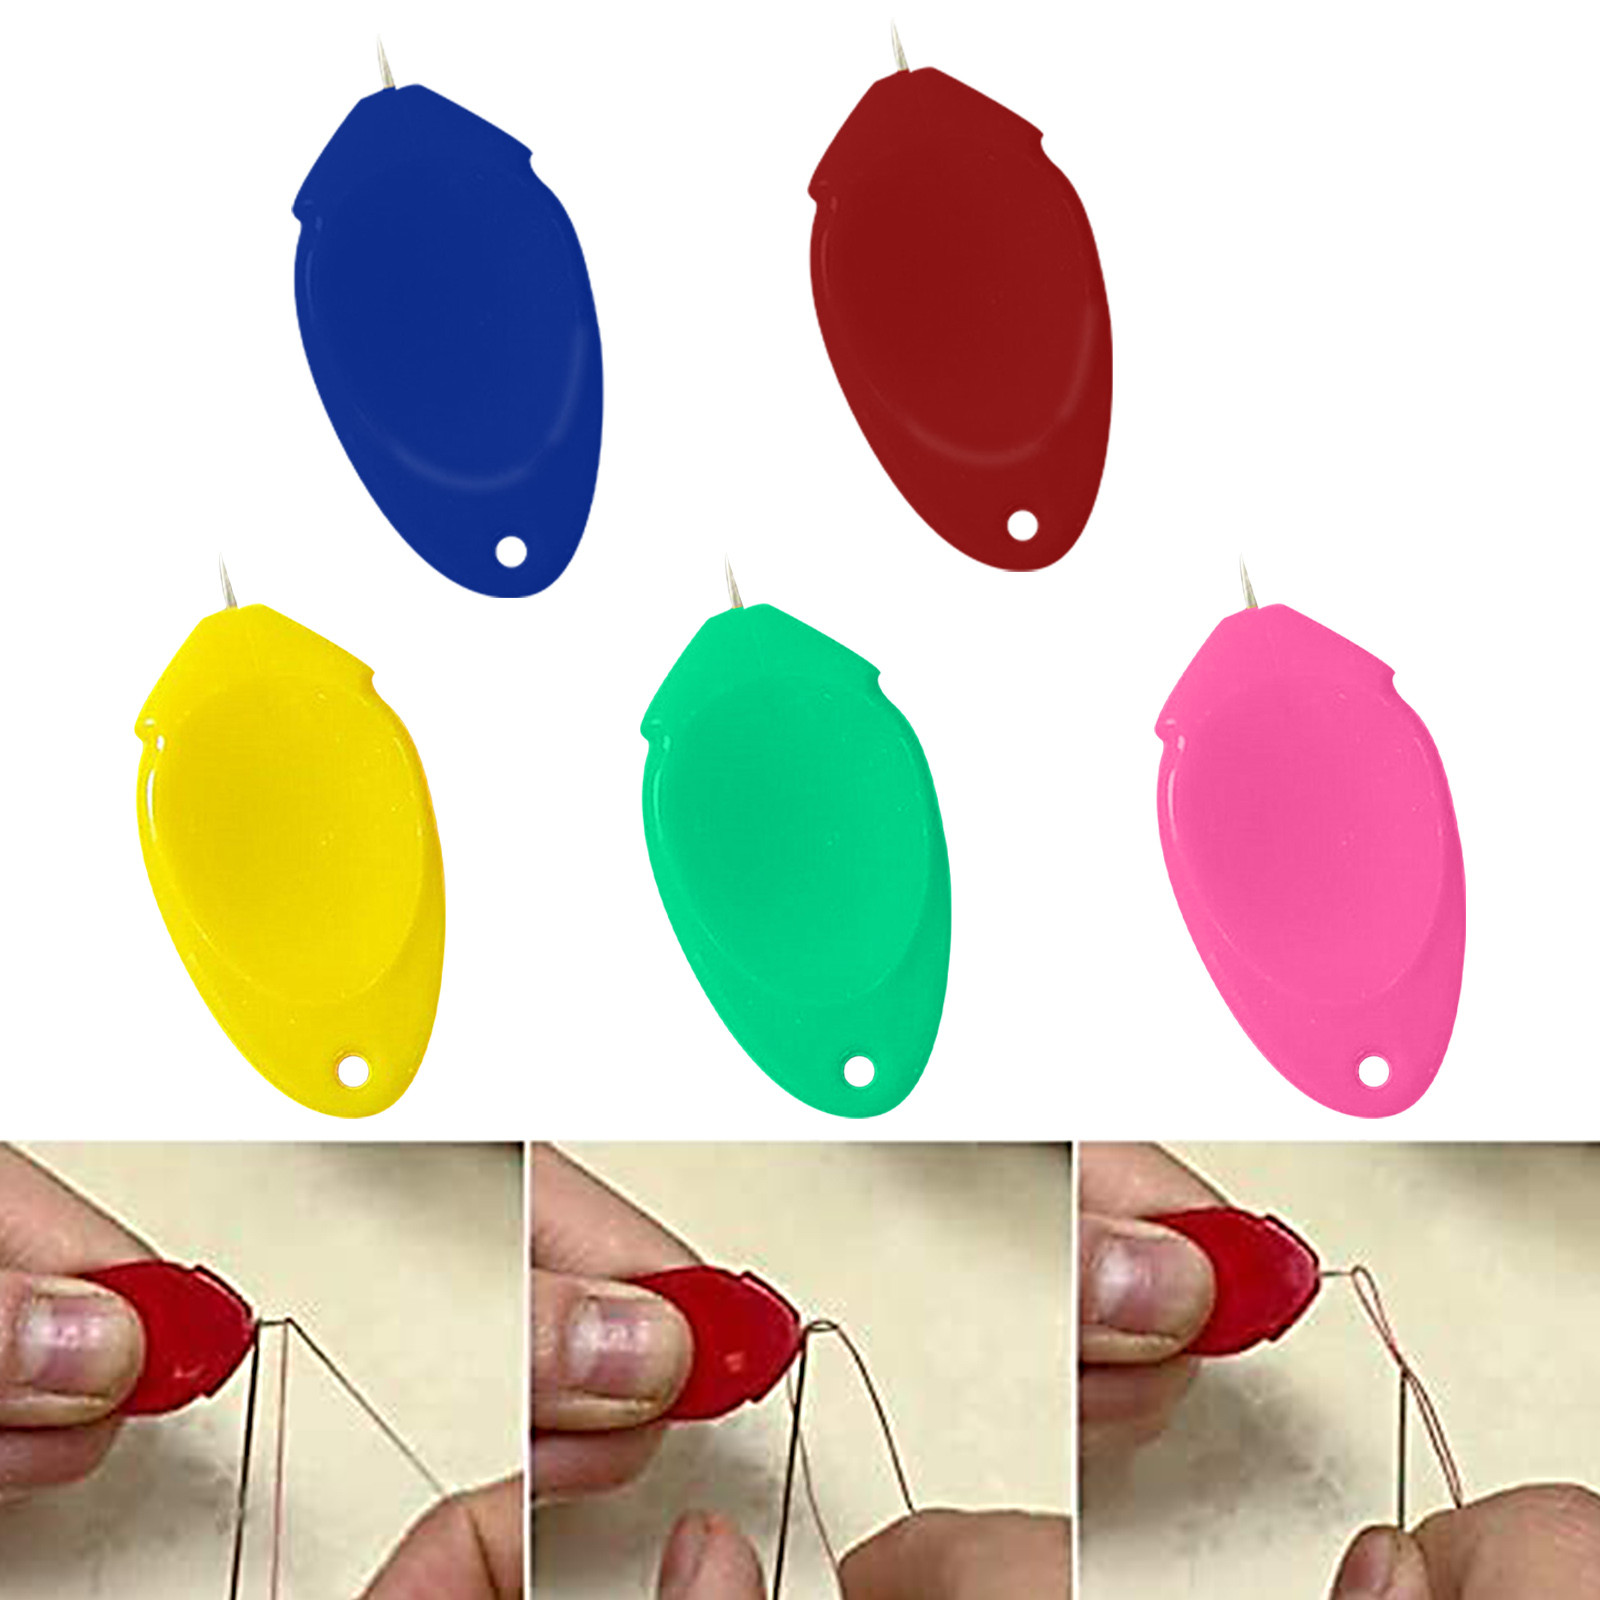 Lanhui 5pcs Plastic Needle Threaders for Sewing, Threader Tool, Size: 1.8 x 0.8